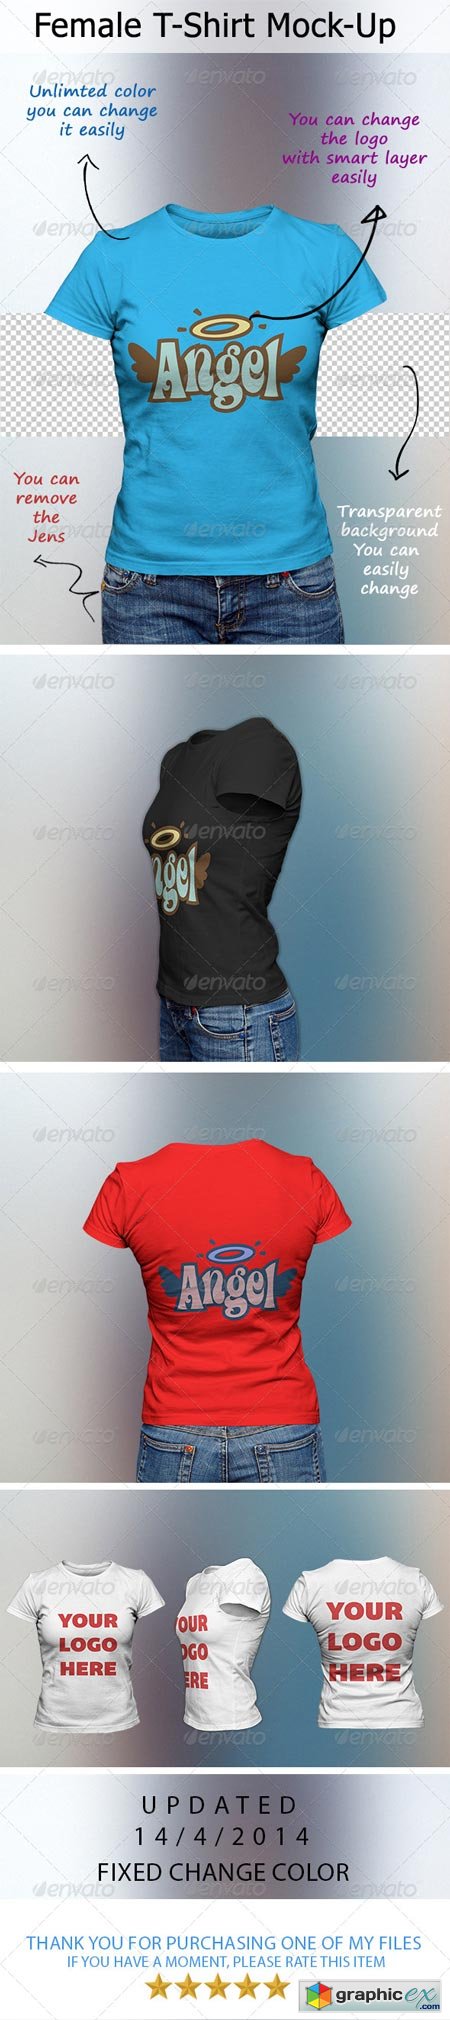 Female T-Shirt Mock-Up 4600045